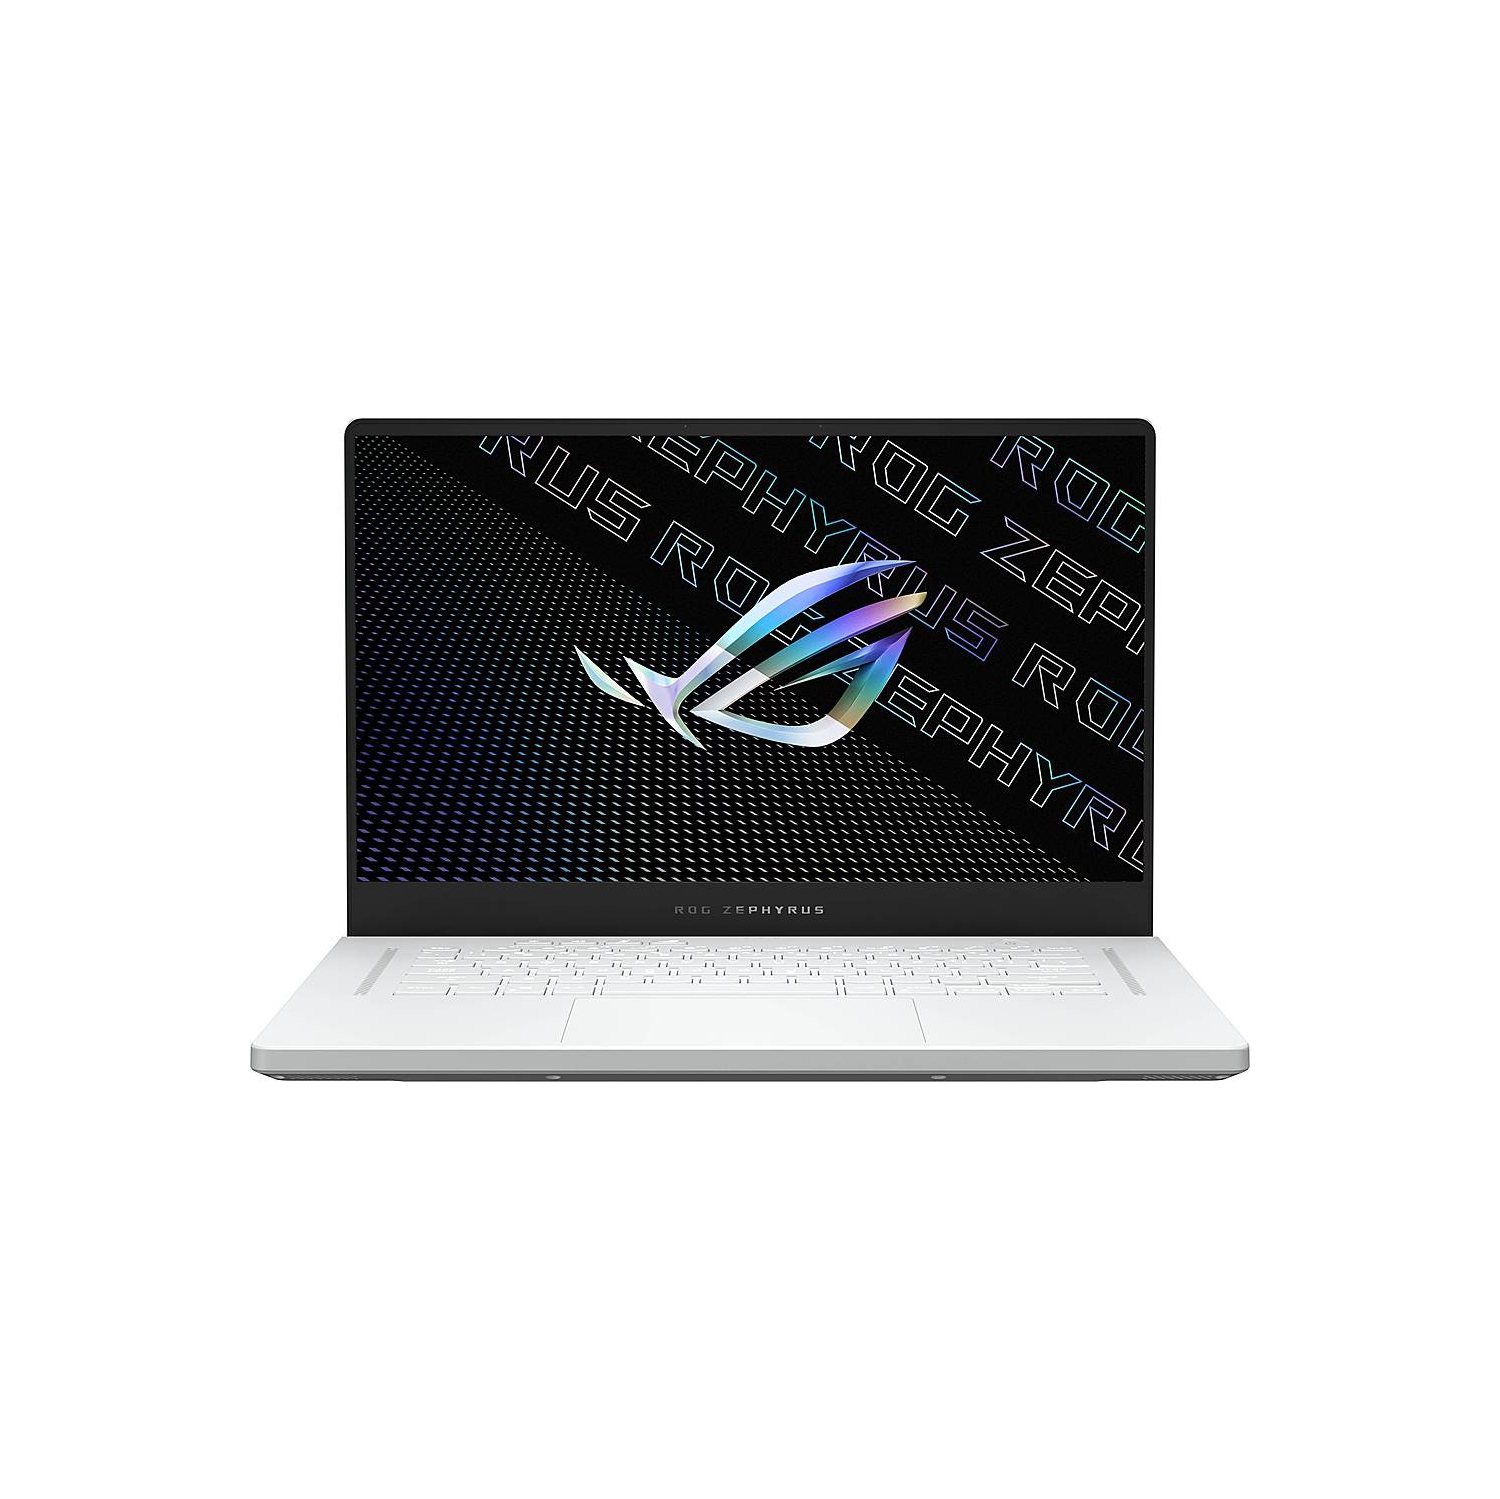 Custom ASUS ROG Zephyrus G15 Laptop (AMD Ryzen 9 5900HS, 32GB RAM, 2x4TB PCIe SSD (8TB), NVIDIA RTX 3080 Max-Q, Win 10 Pro)